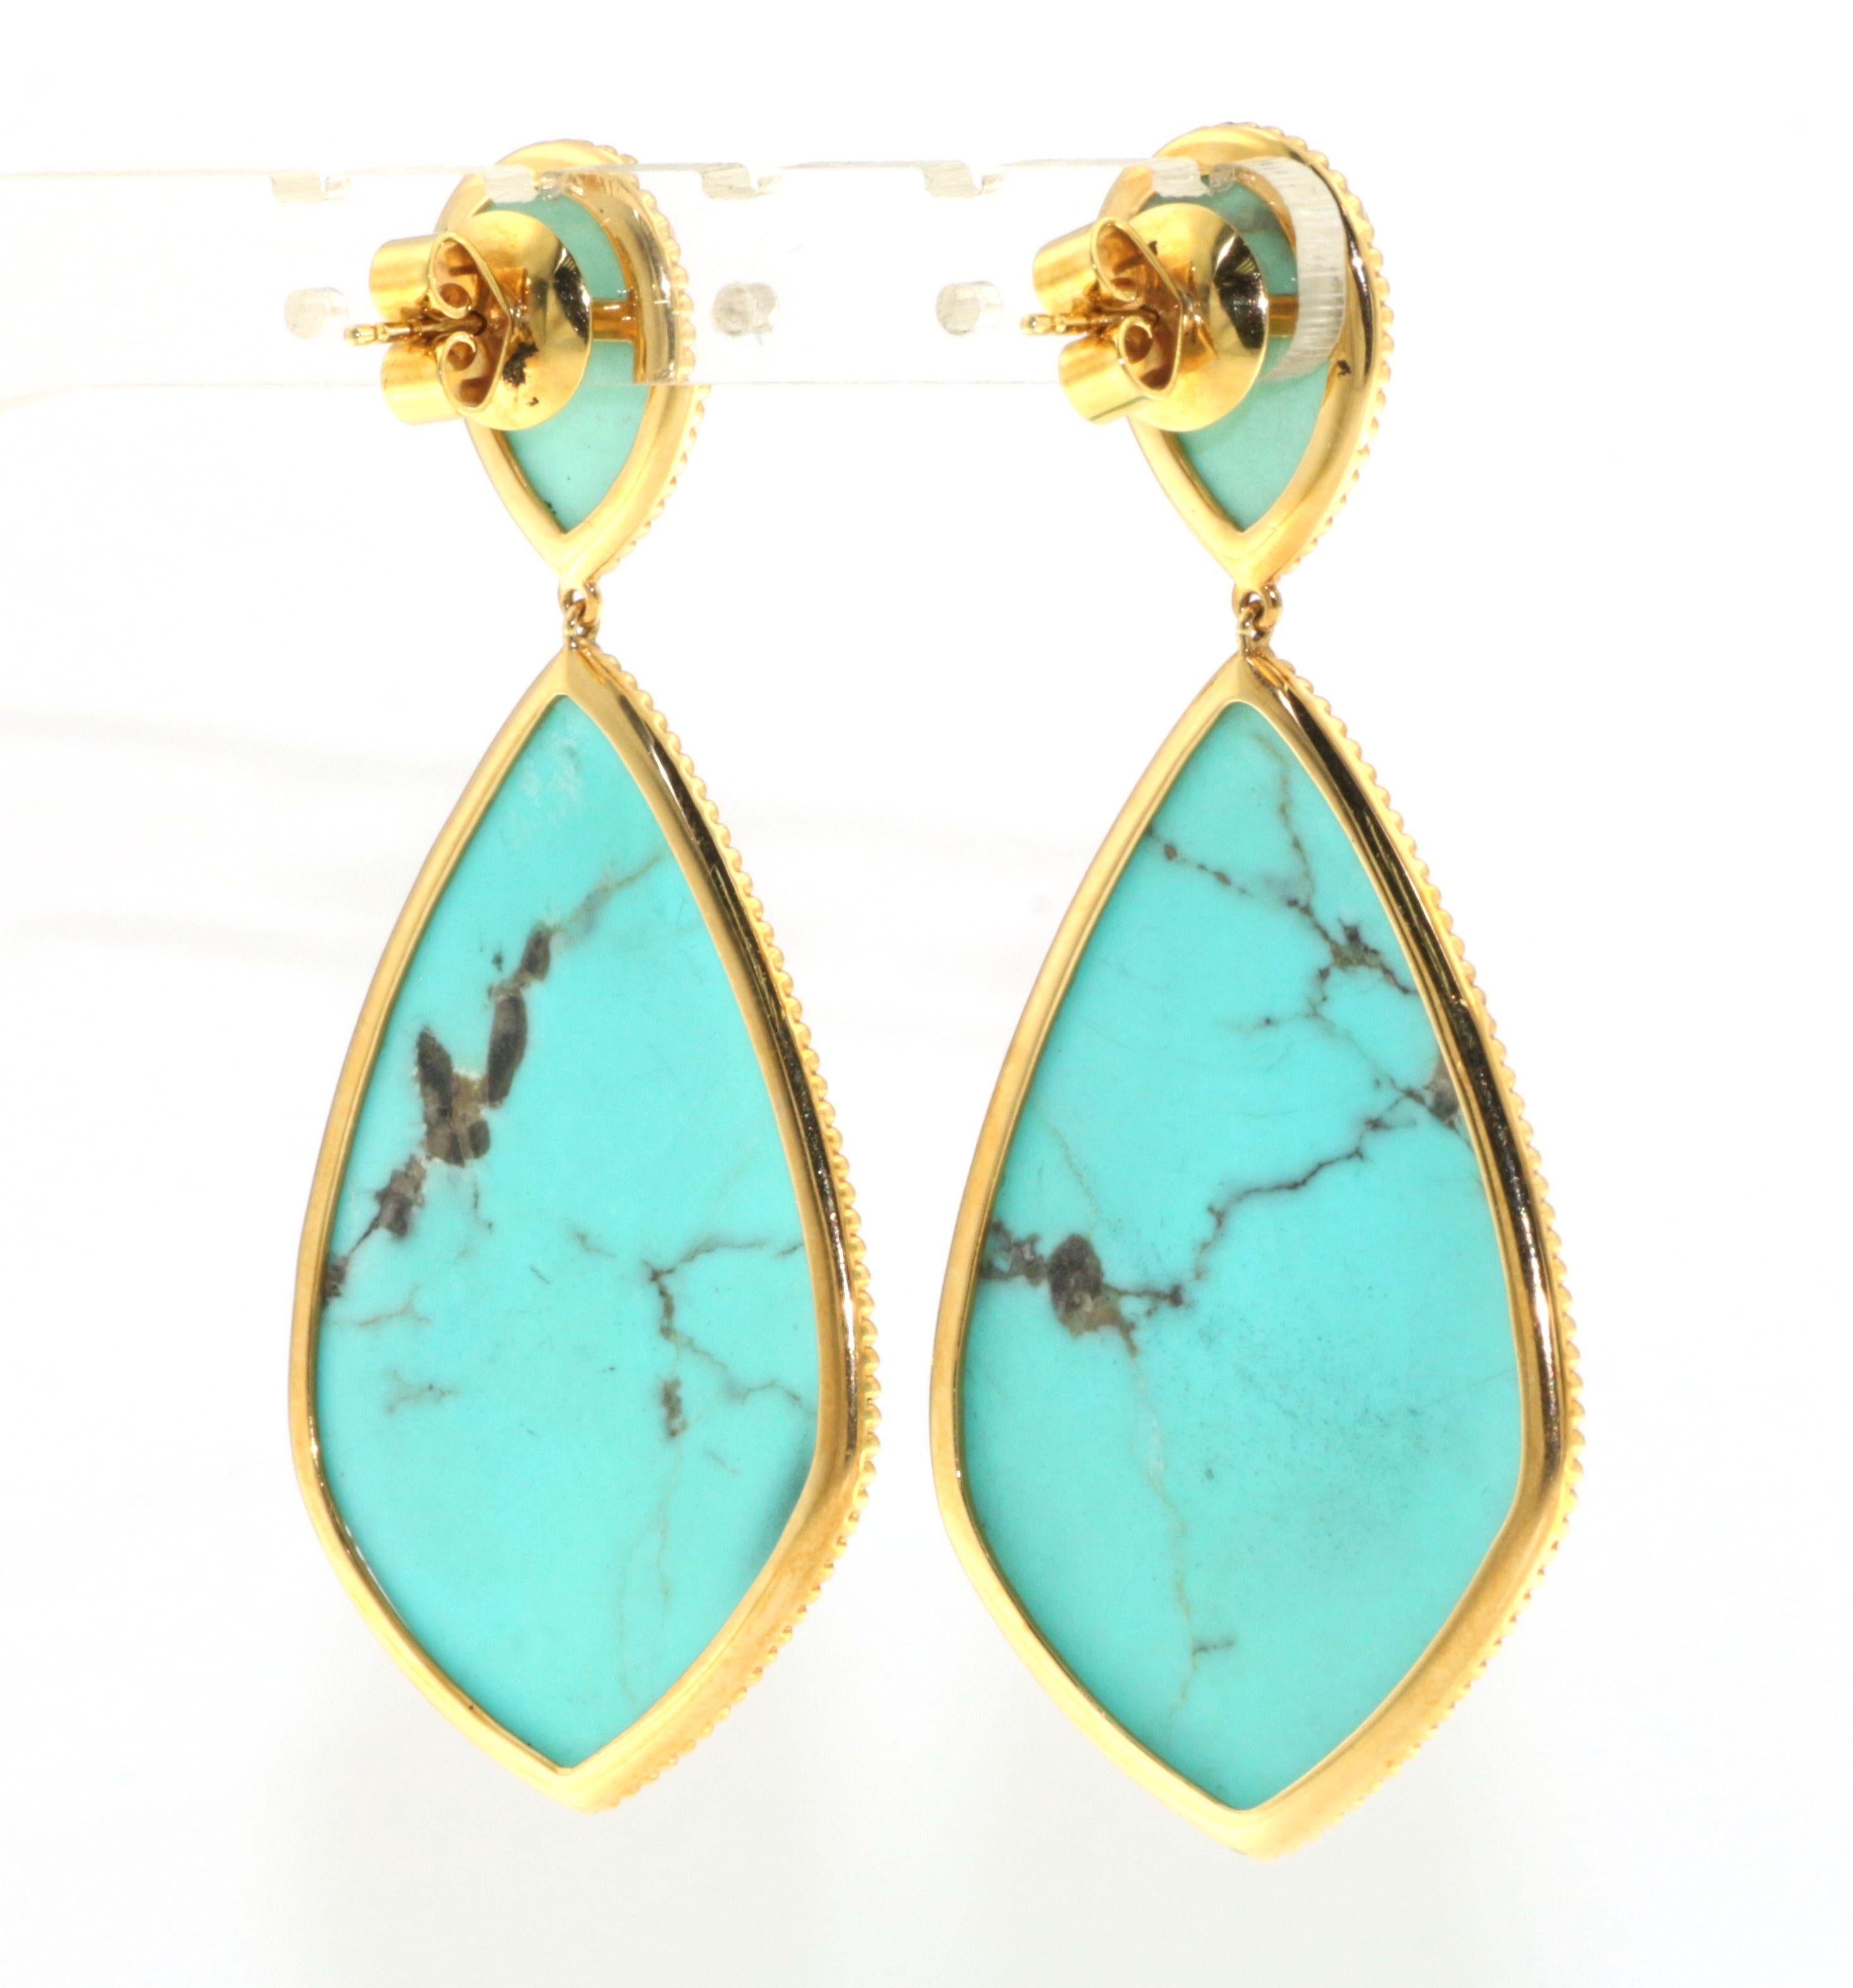 Uncut Vintage 53.31 Carat Turquoise Quartz Doublet Dangle Earrings in 18K Yellow Gold For Sale